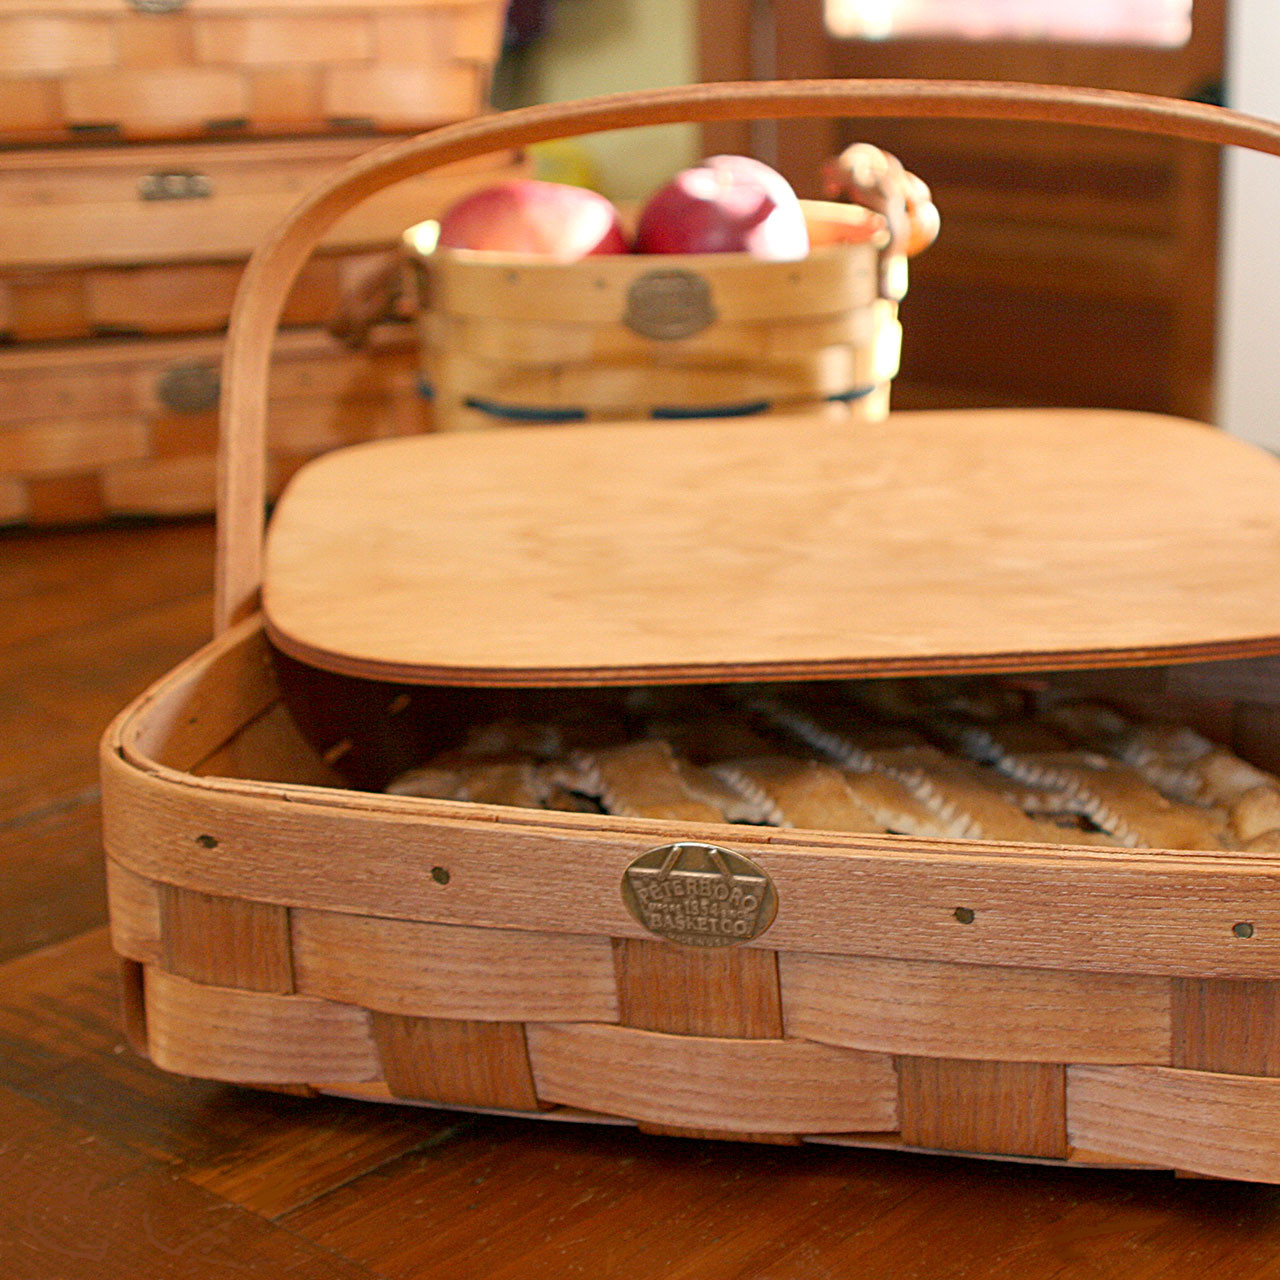 Wicker Basket Bread Storage Baskets Food Serving Baskets - Temu